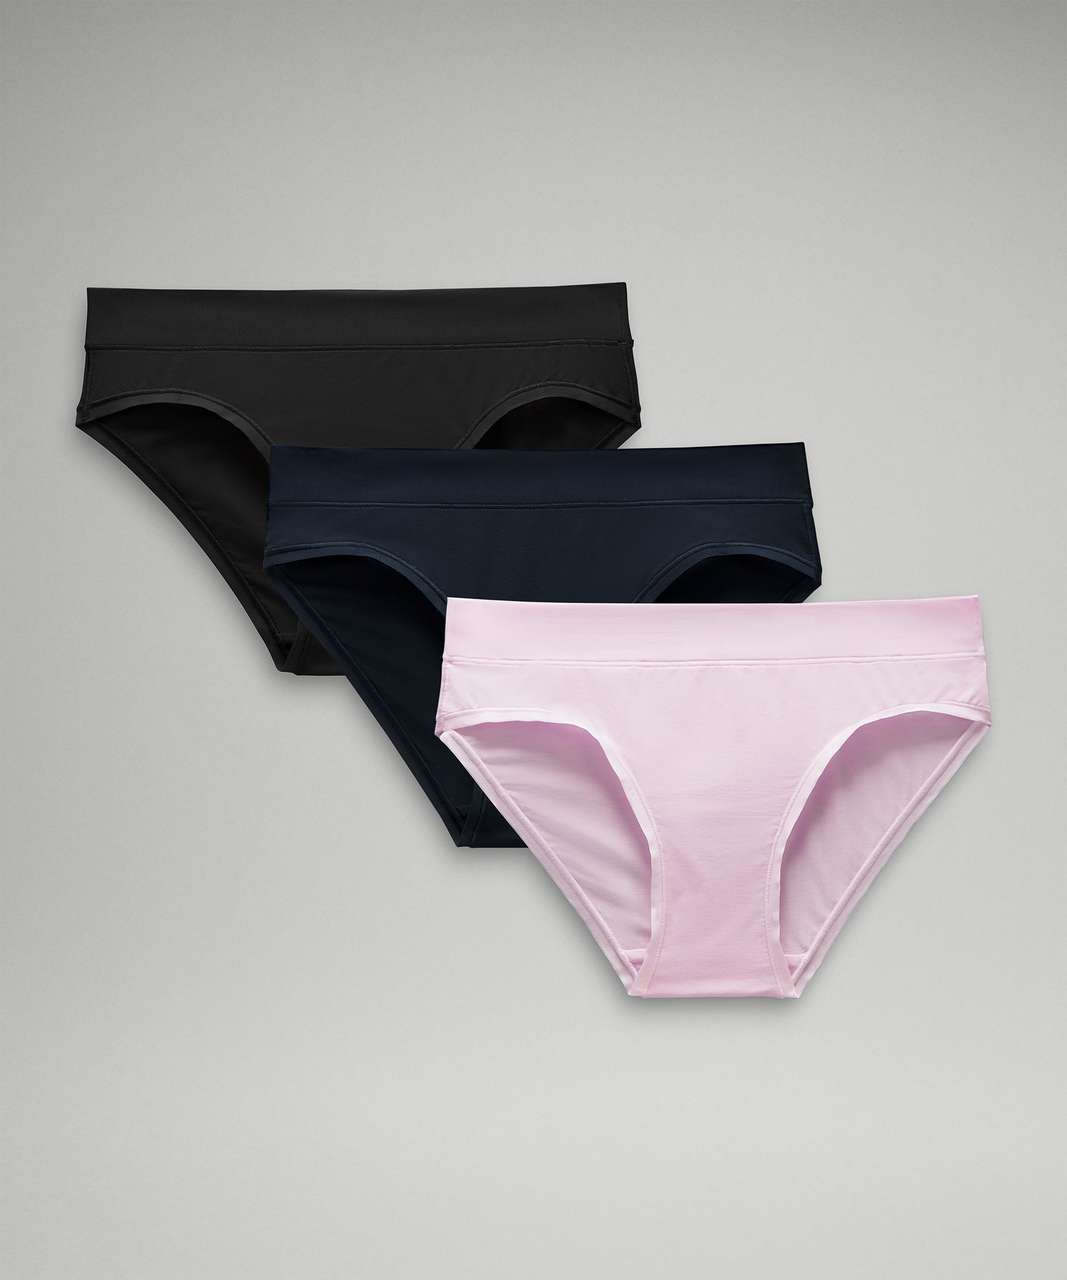 Lululemon UnderEase Mid-Rise Bikini Underwear *3 Pack - Black / True Navy / Meadowsweet Pink